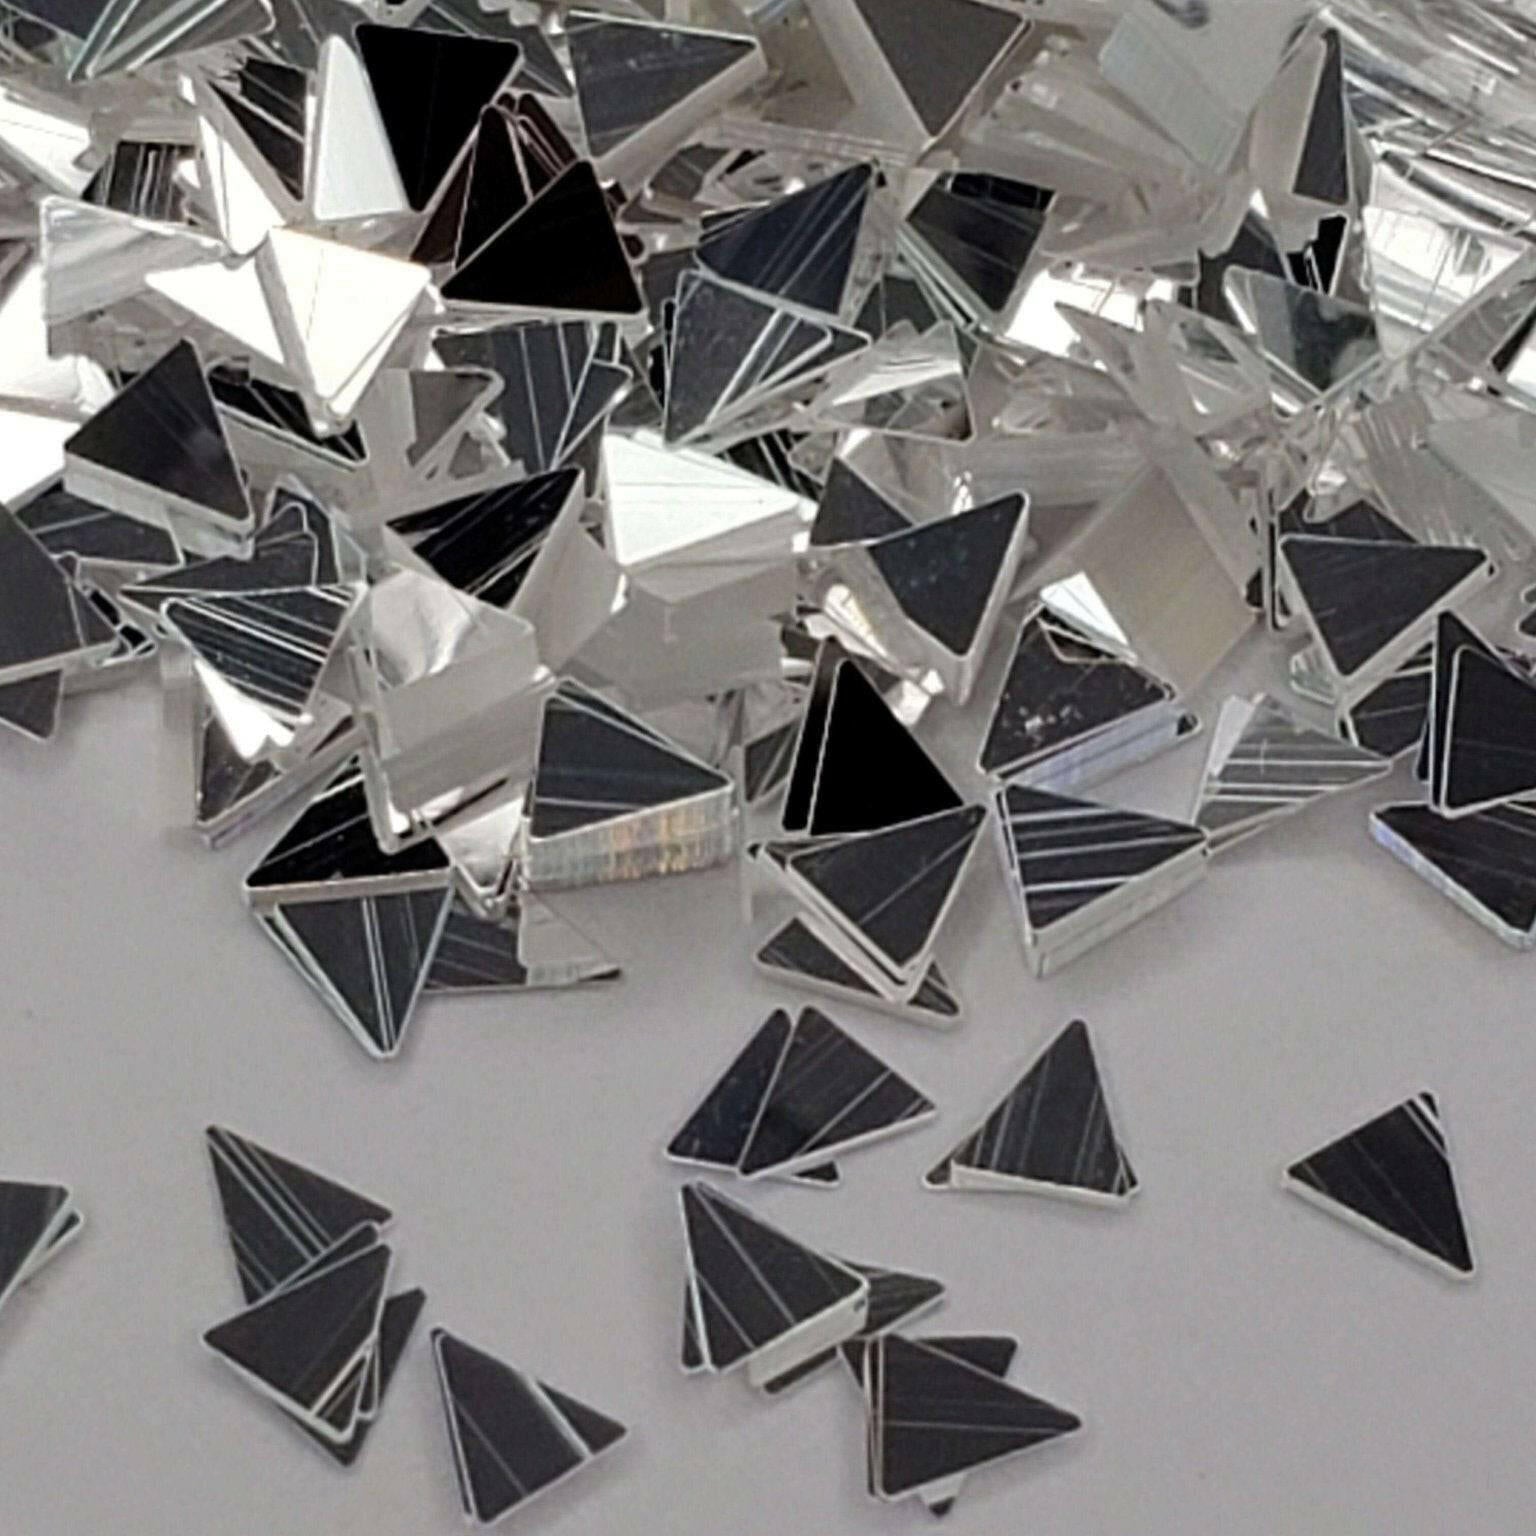 White Chrome Triangle, Glitter (131) - thePINKchair.ca - Glitter - thePINKchair nail studio